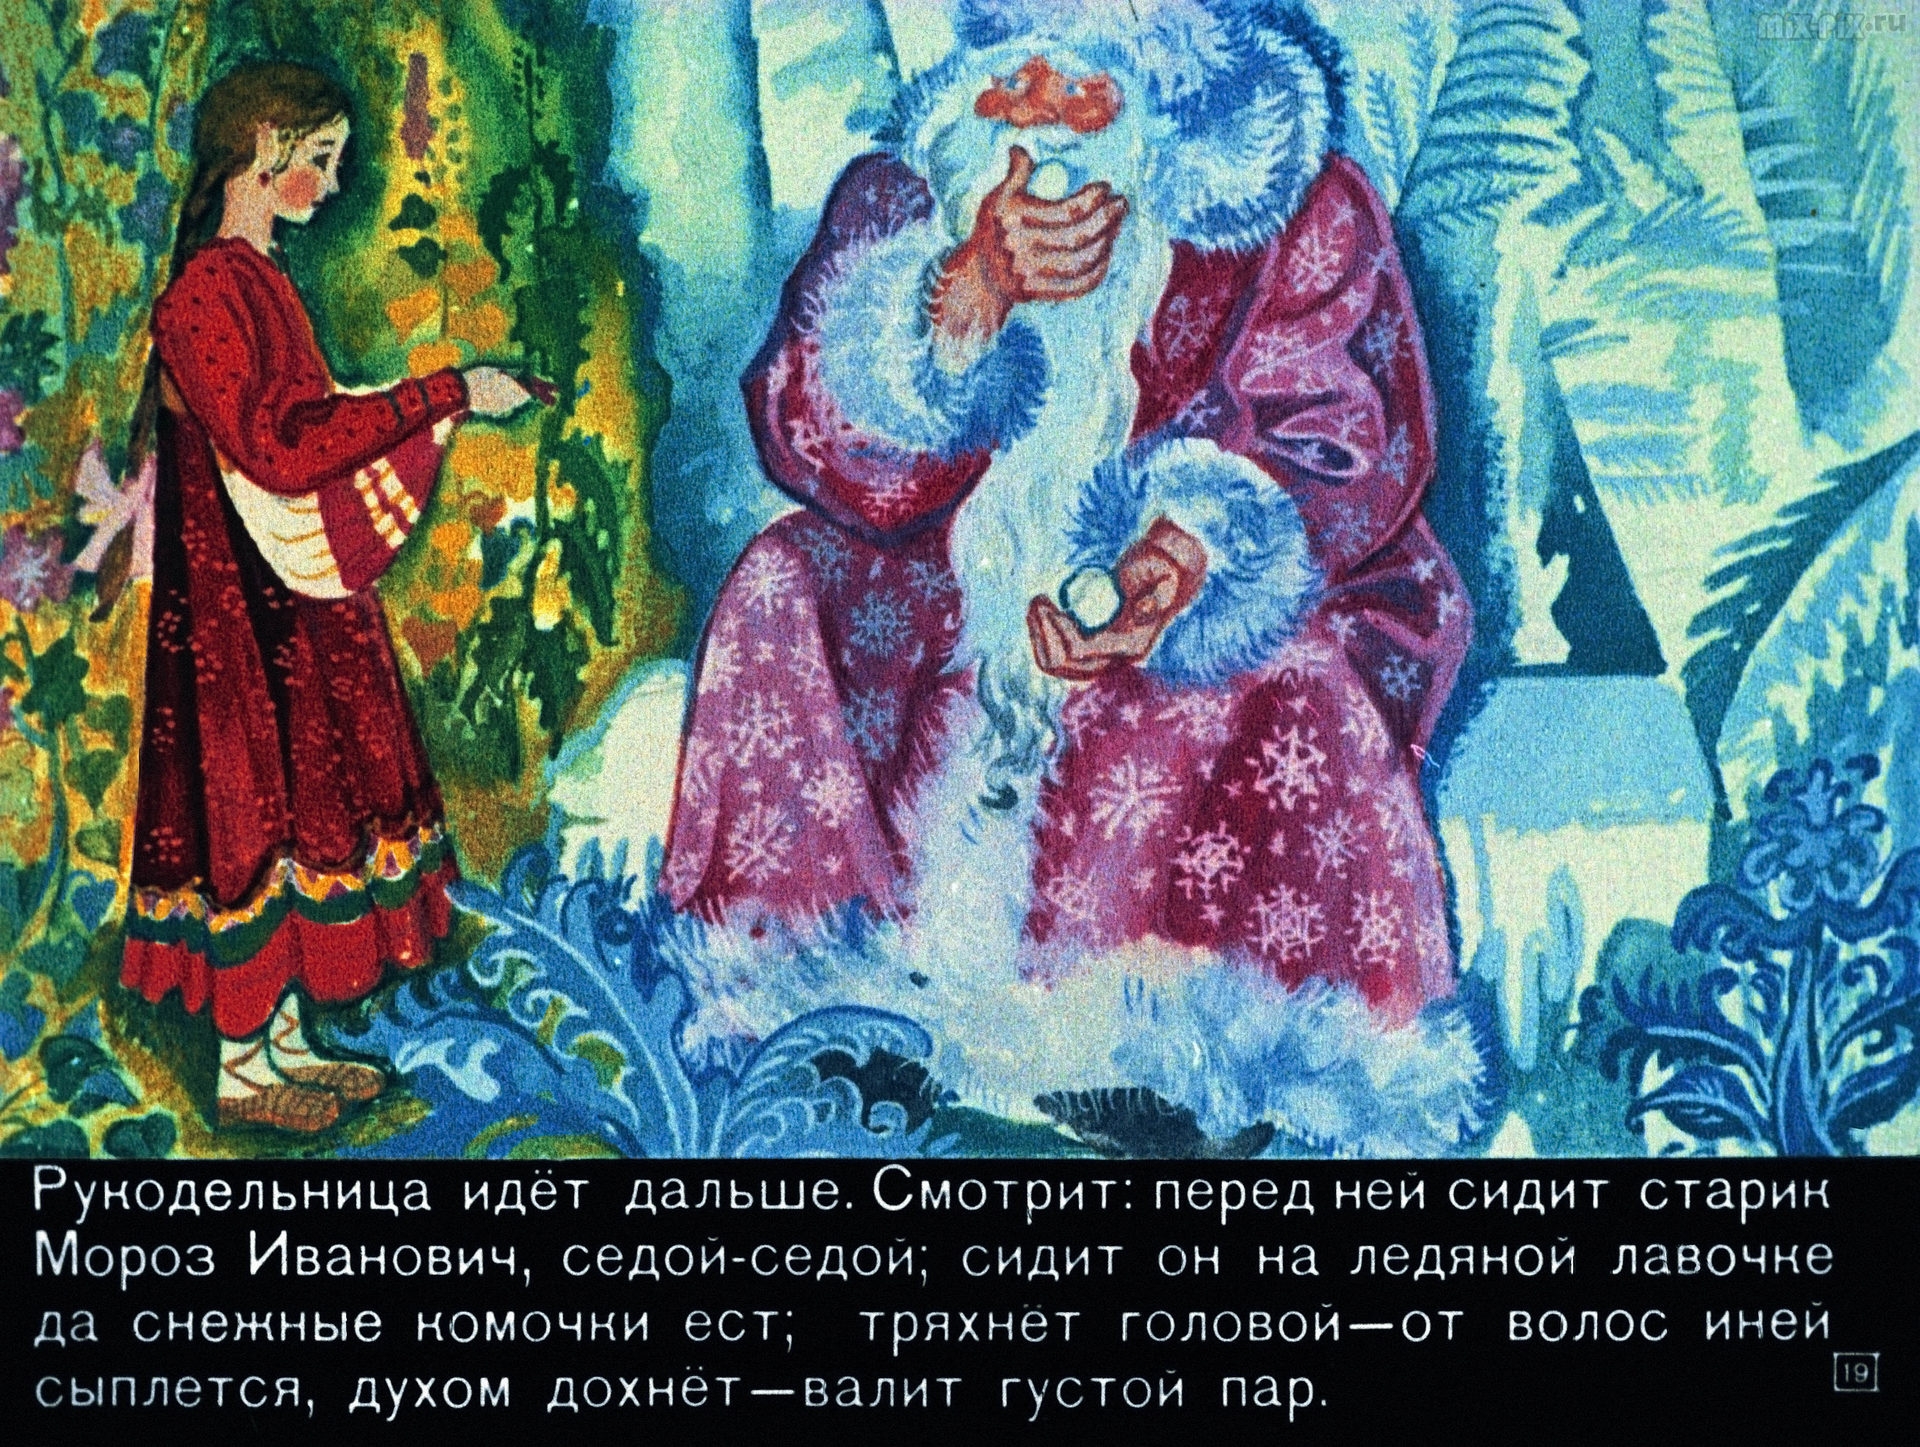 Мороз Иванович иллюстрации